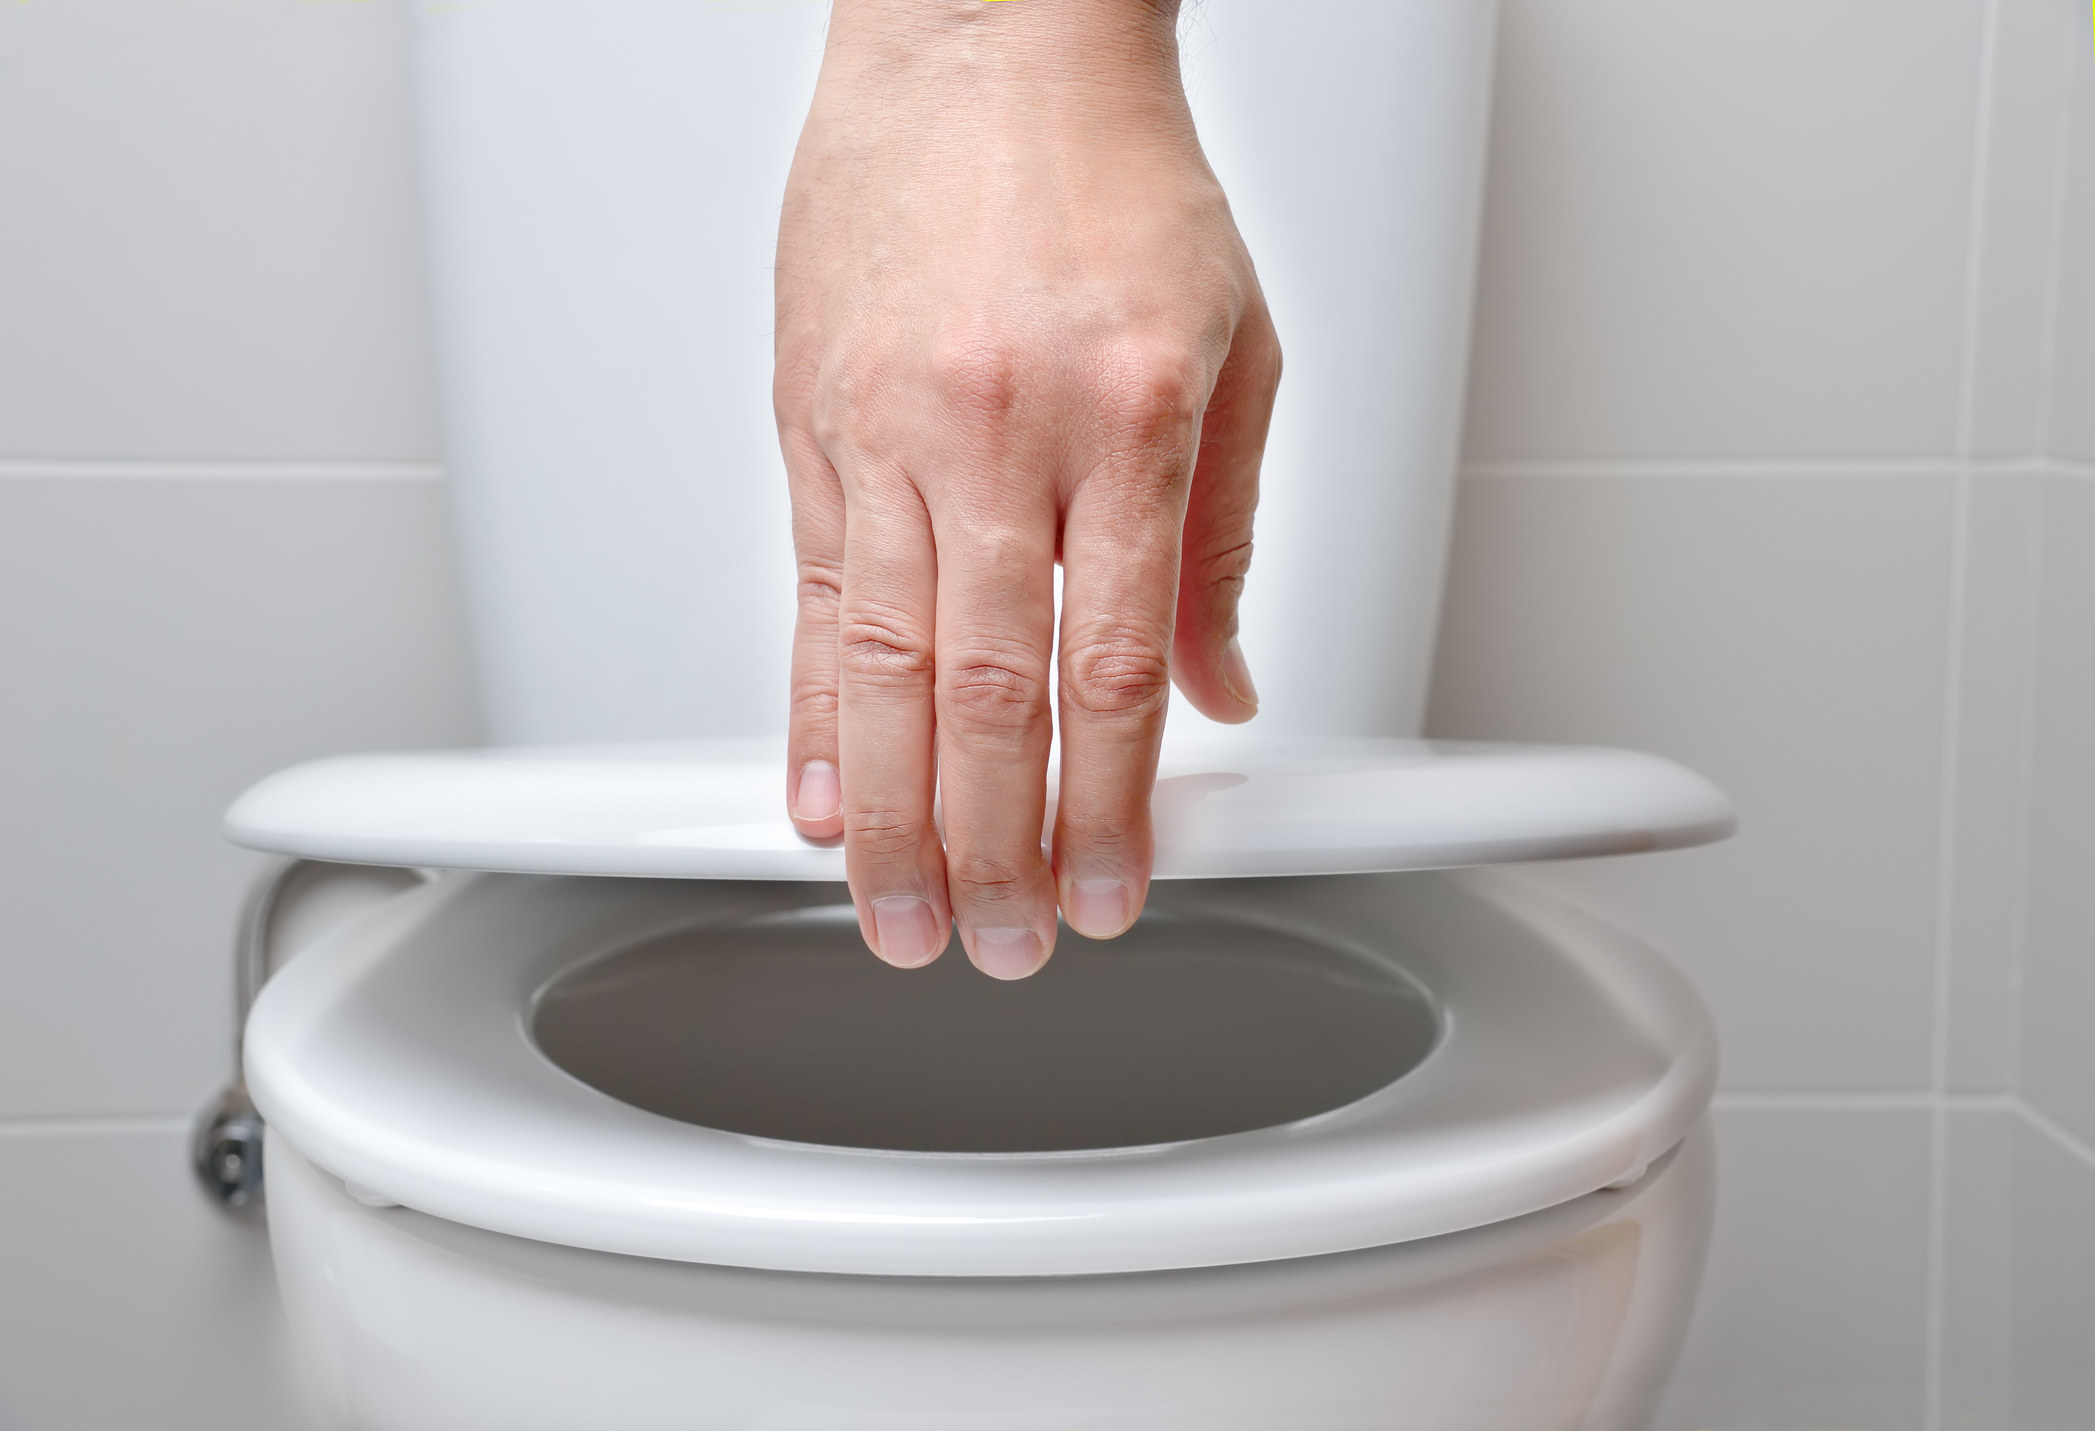 Hand of man closing toilet seat